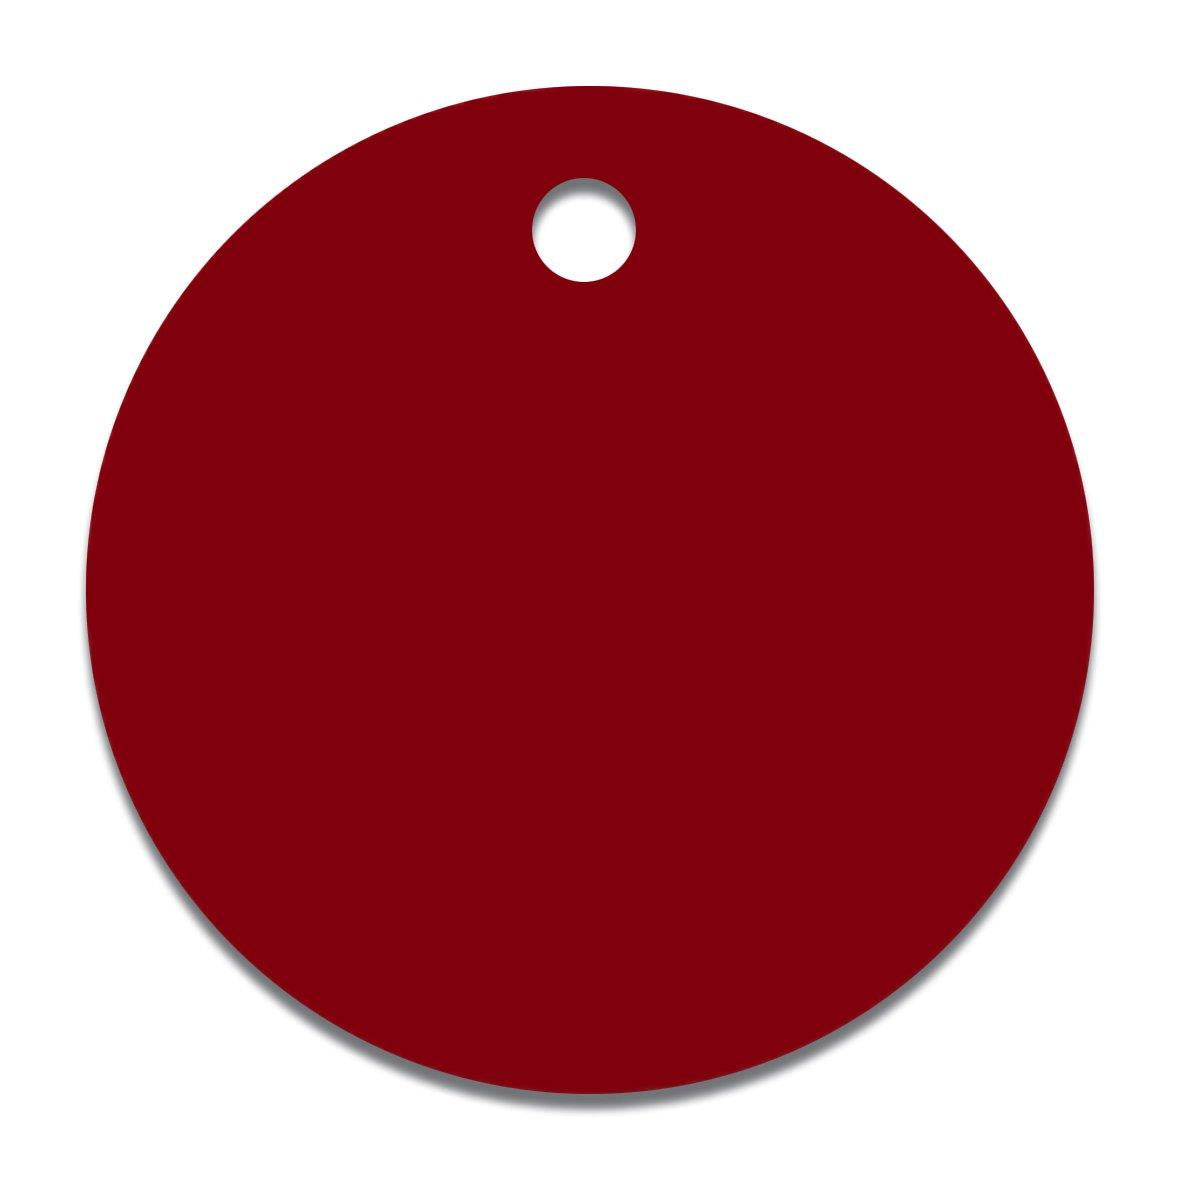 Plastic Red Circle Tag